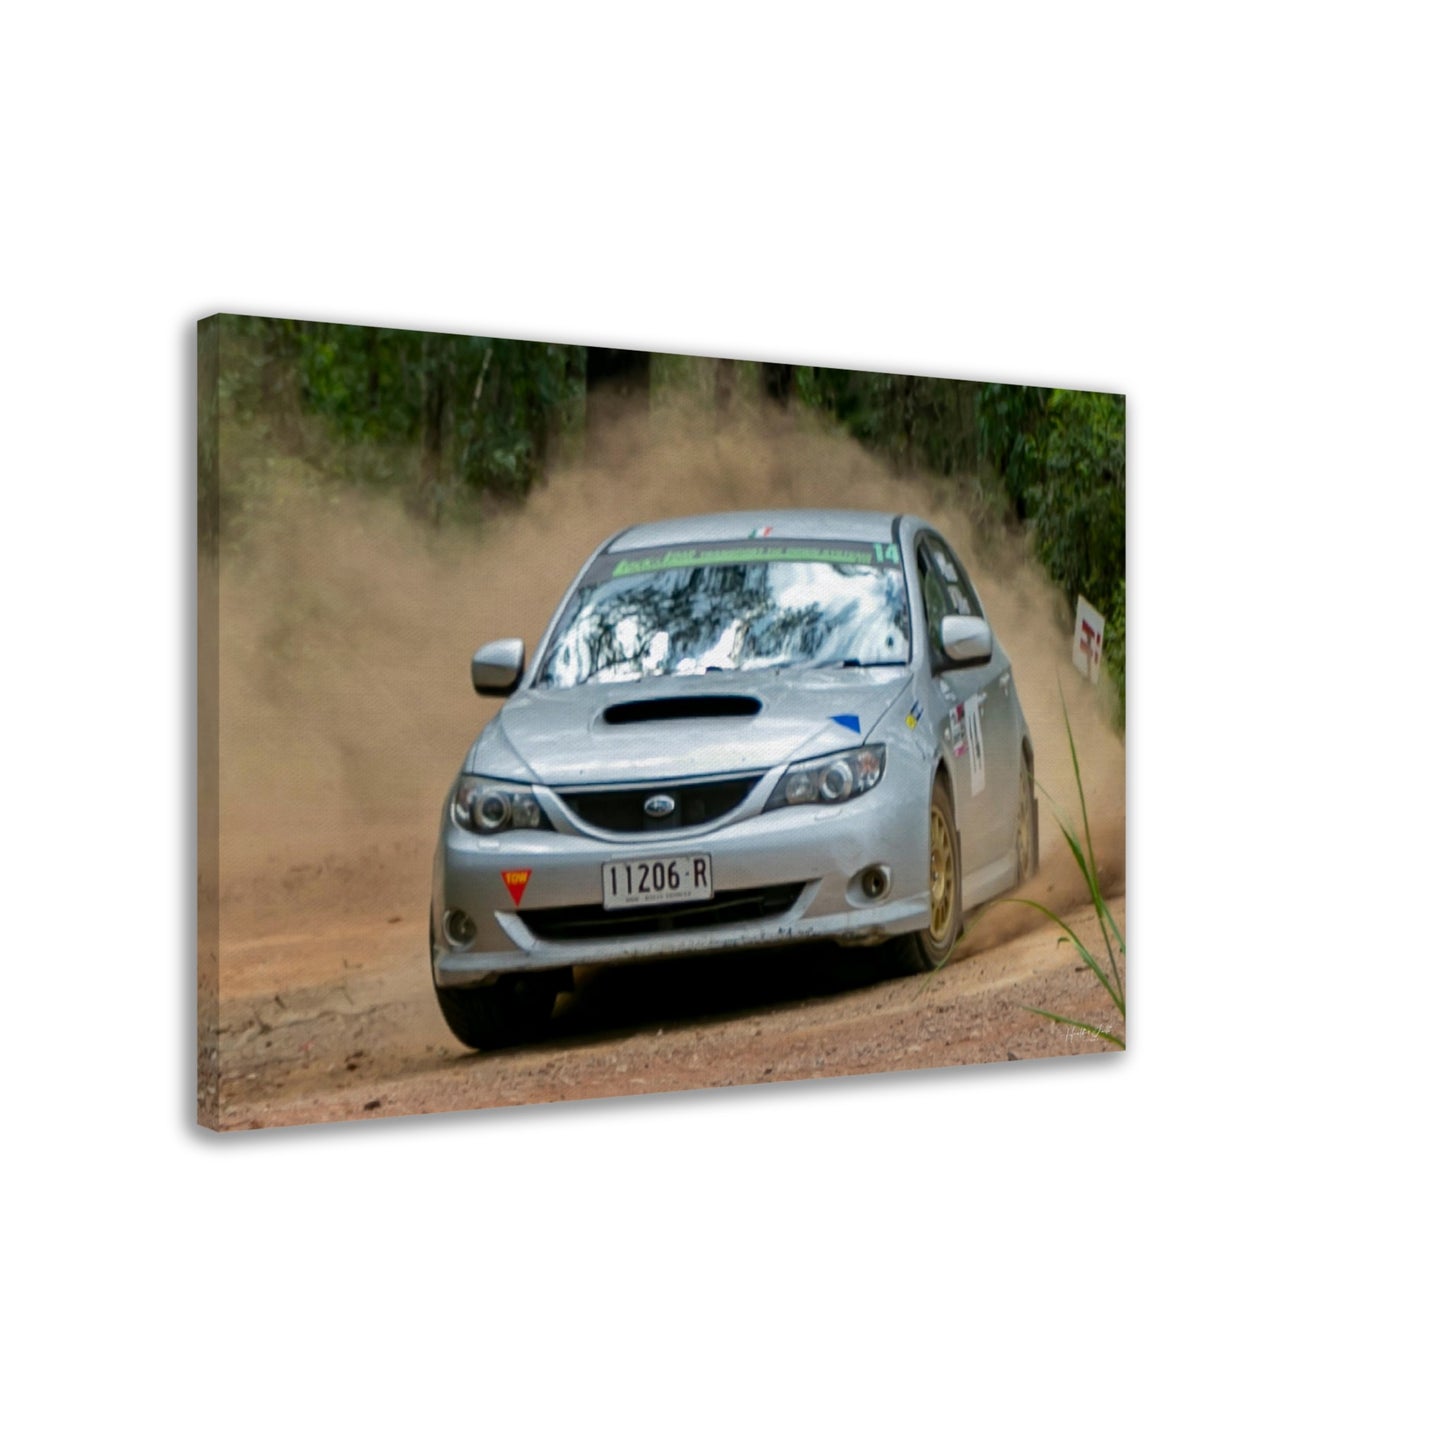 Amsag Taree Rally - Car 14 - Mac Kierans / Muireann Hayes